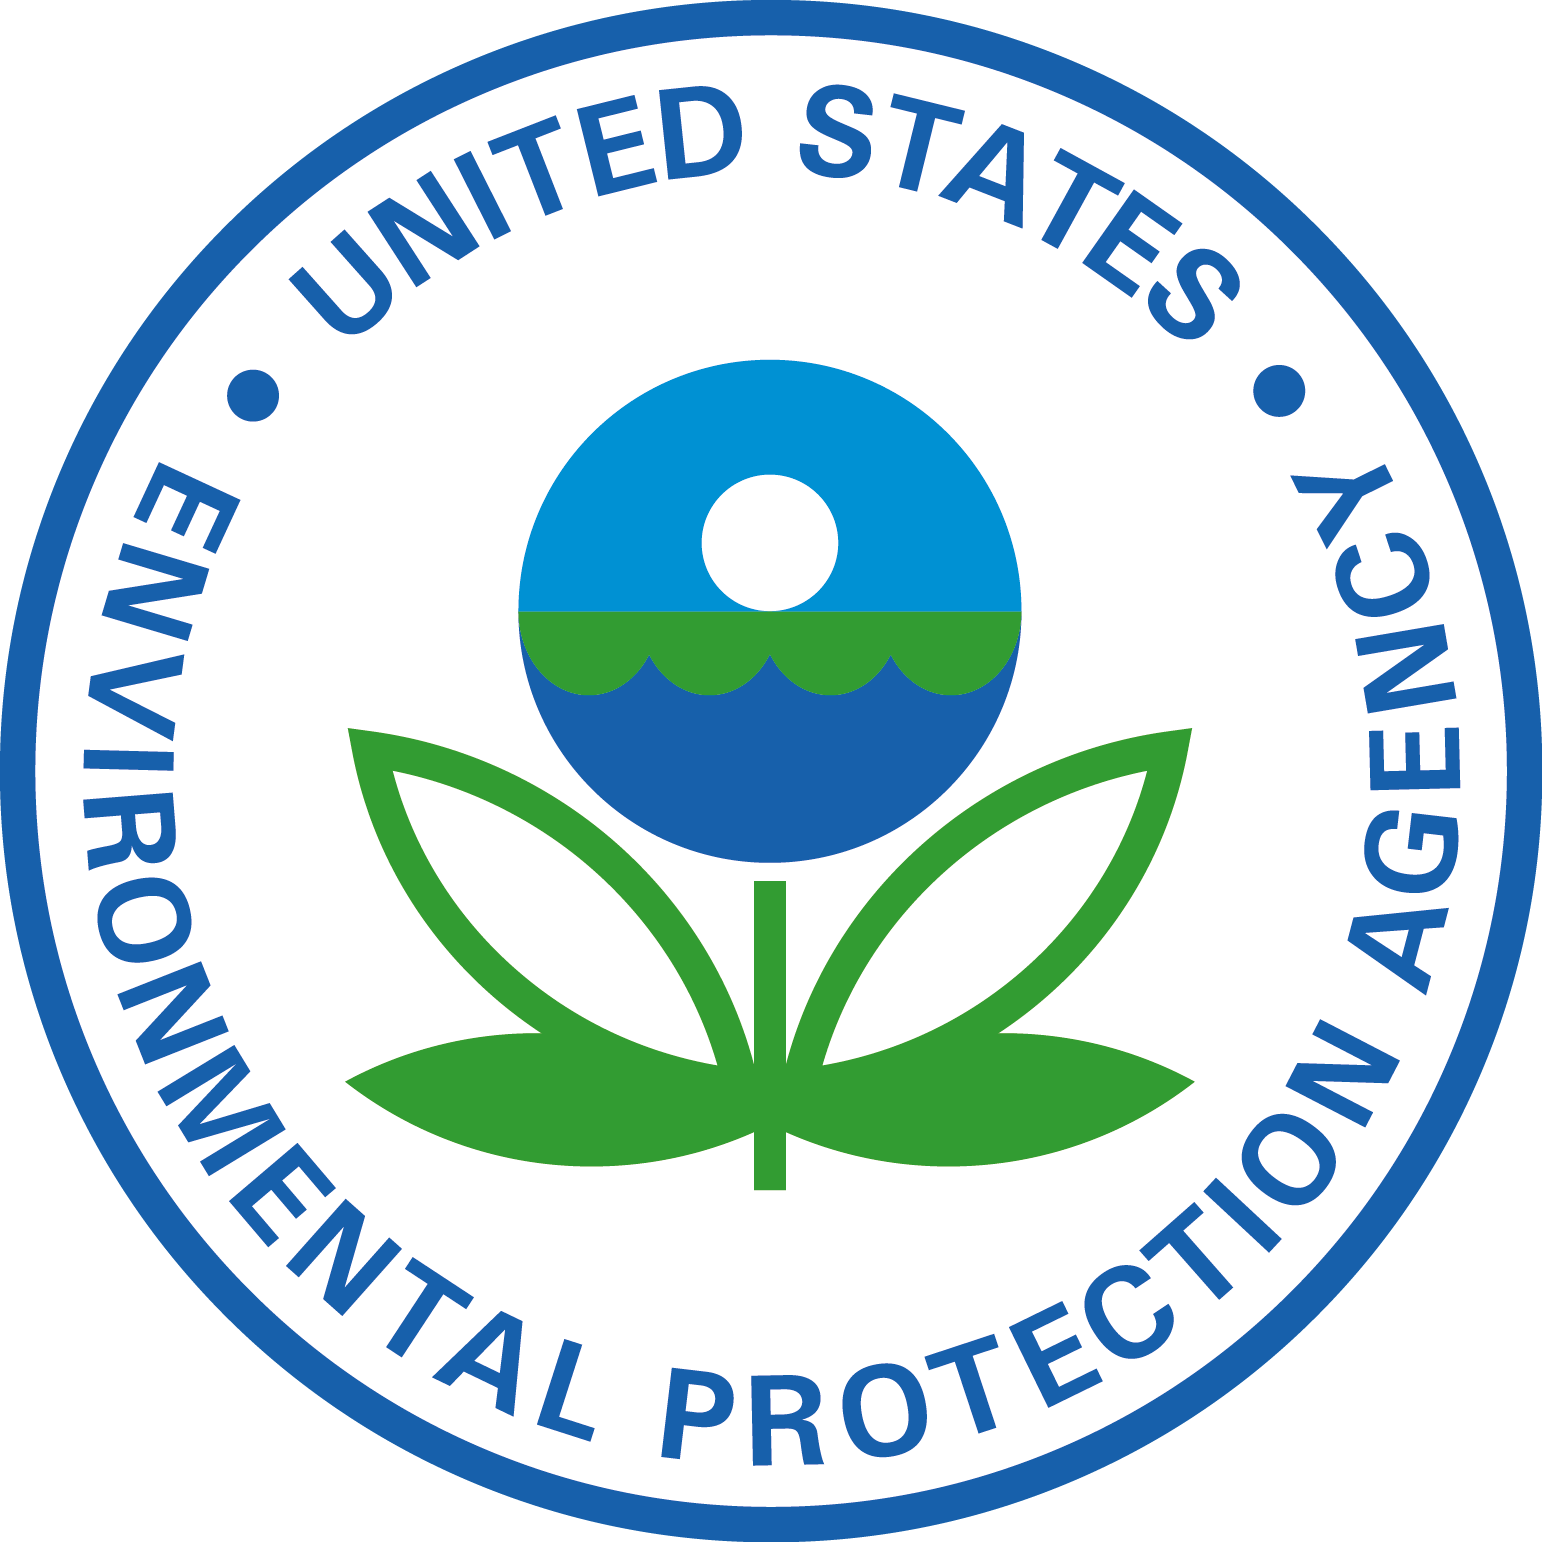 EPA Logo [Environmental Protection Agency   epa.gov] png